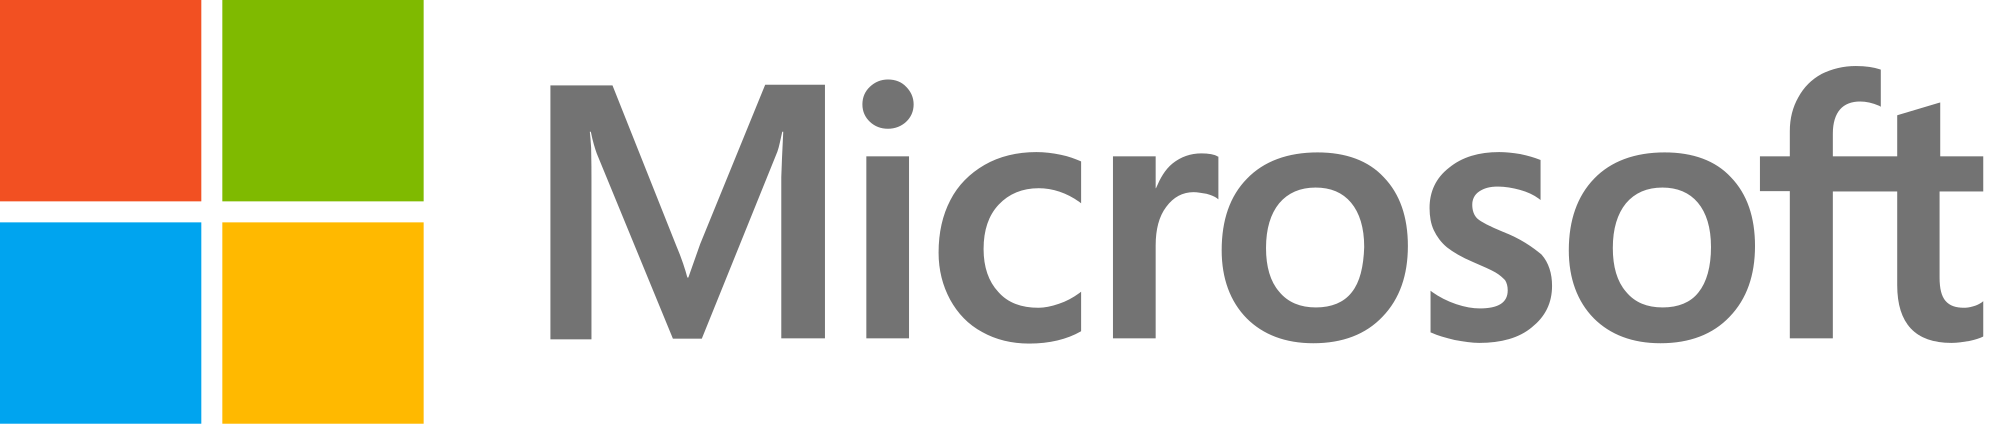 microsoft-logo-png-2423